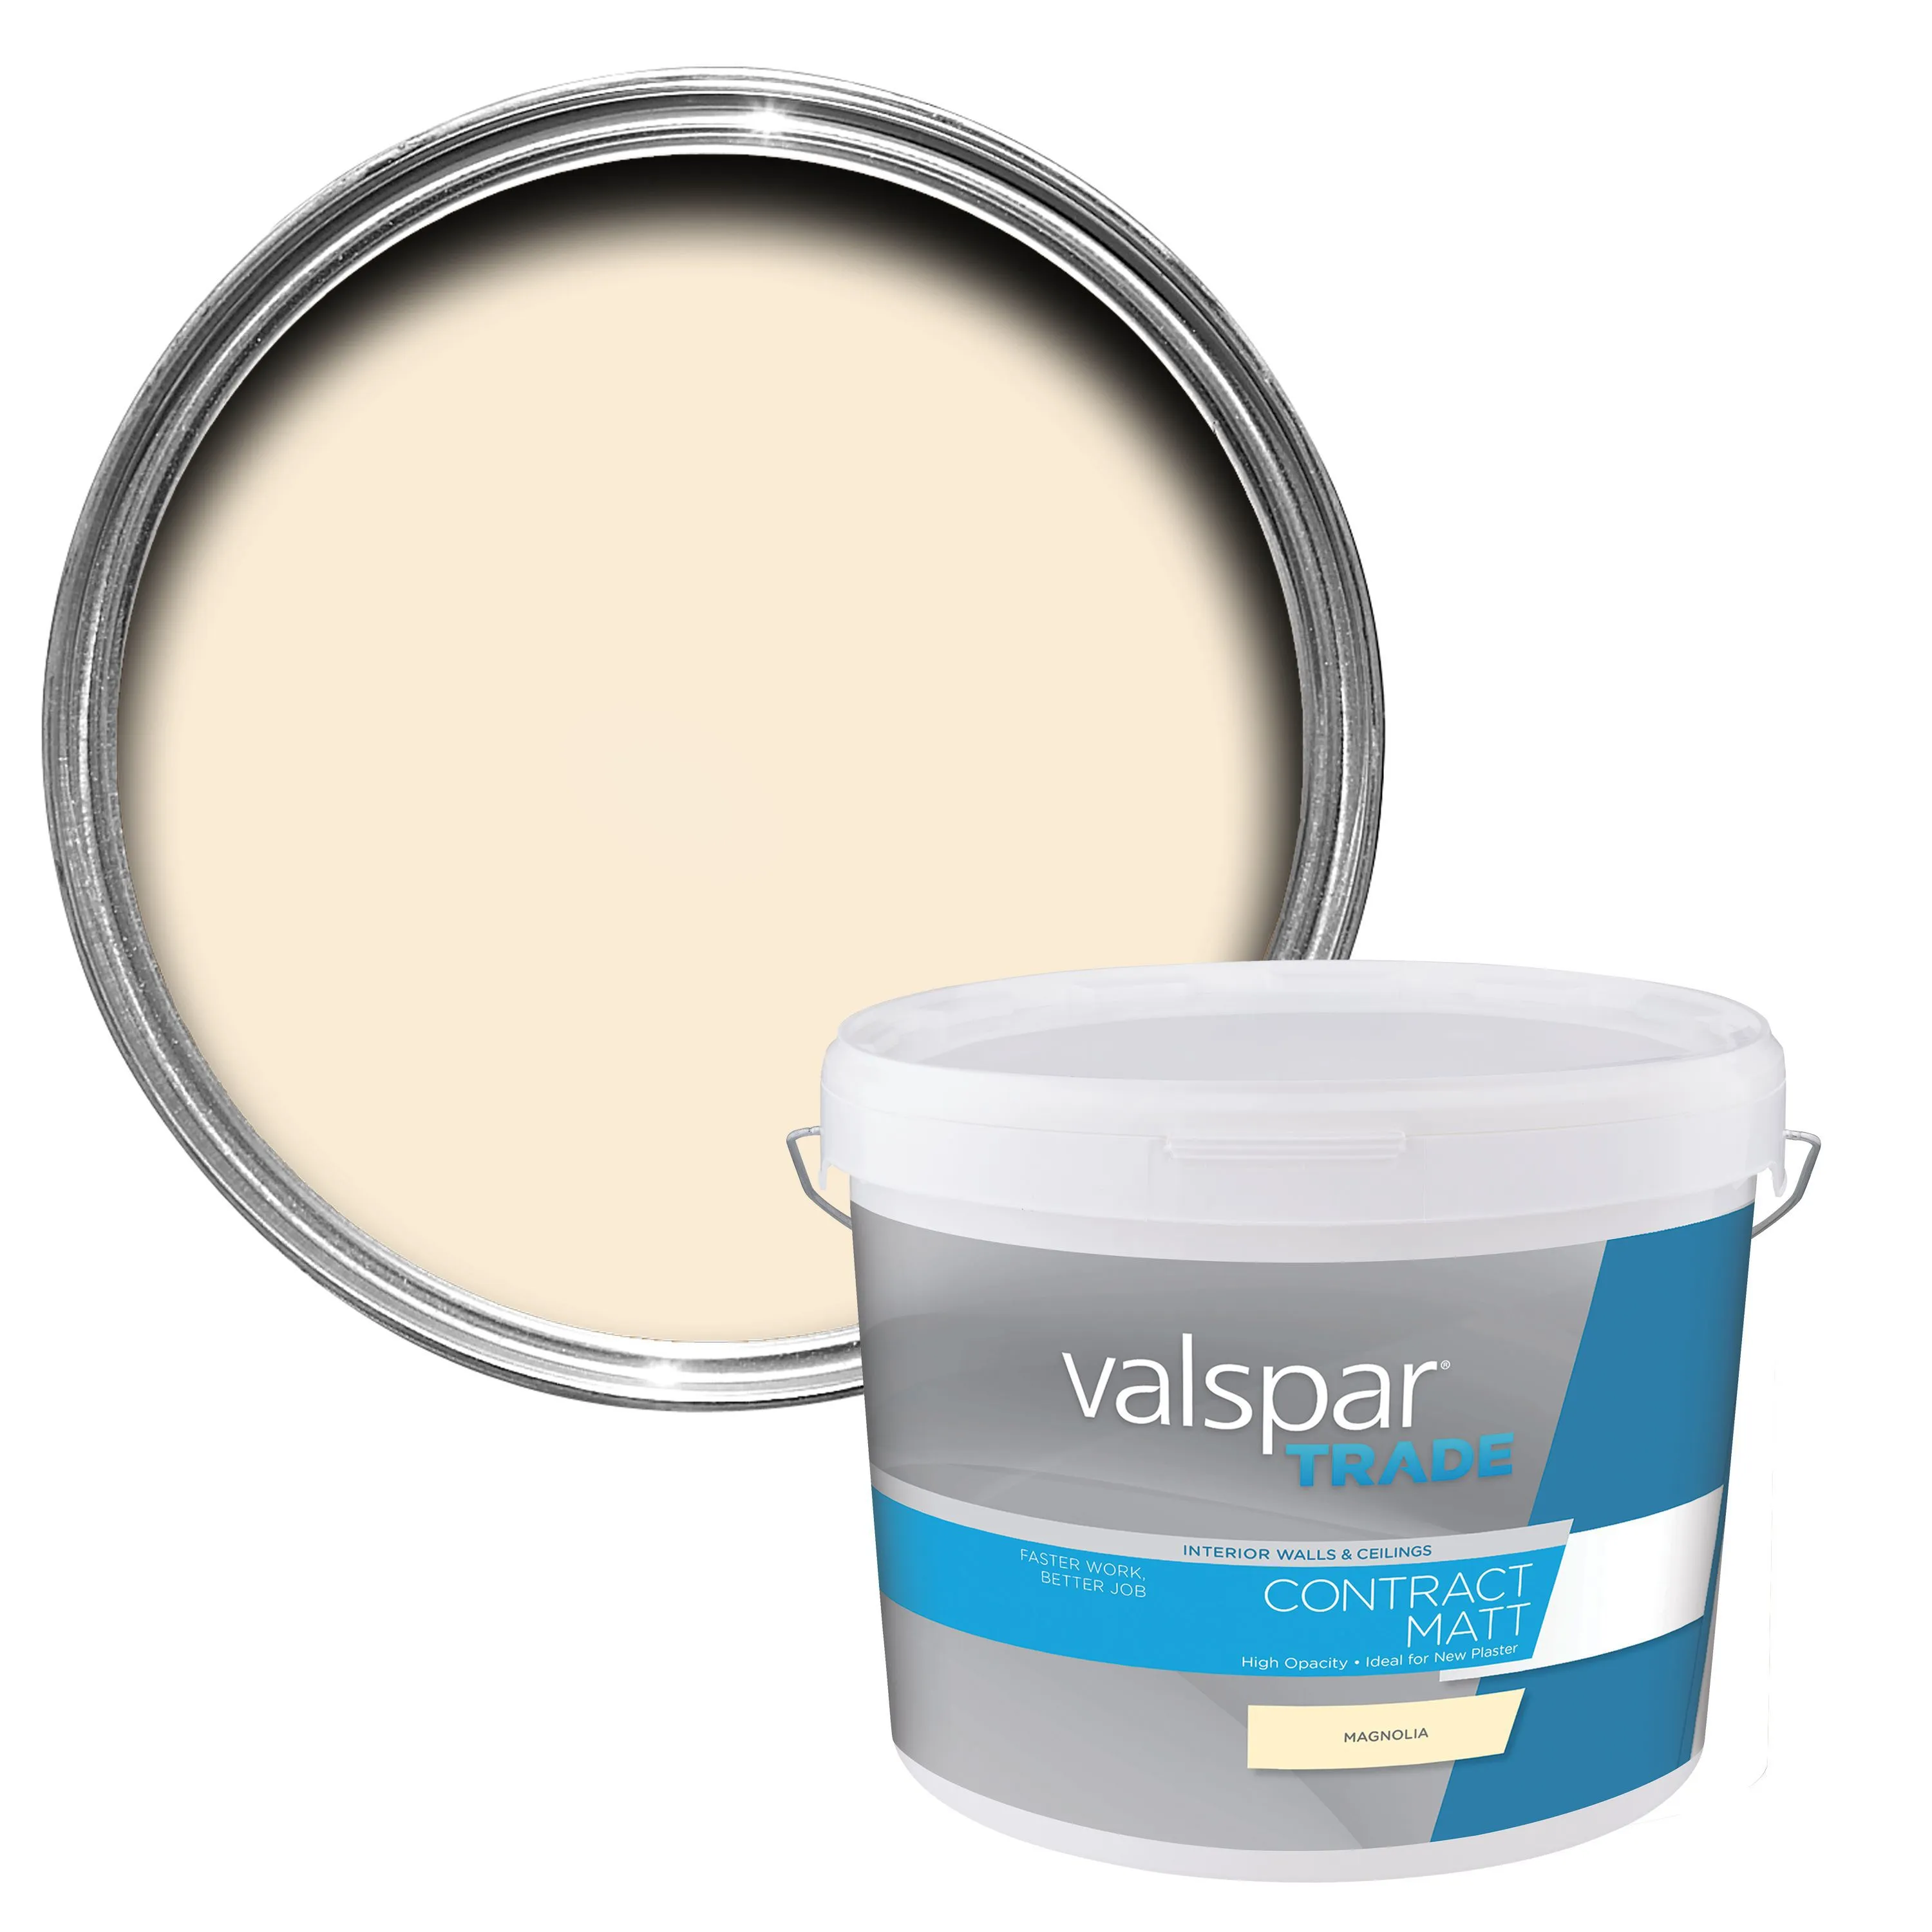 Valspar Trade Magnolia Contract matt Emulsion paint, 10L